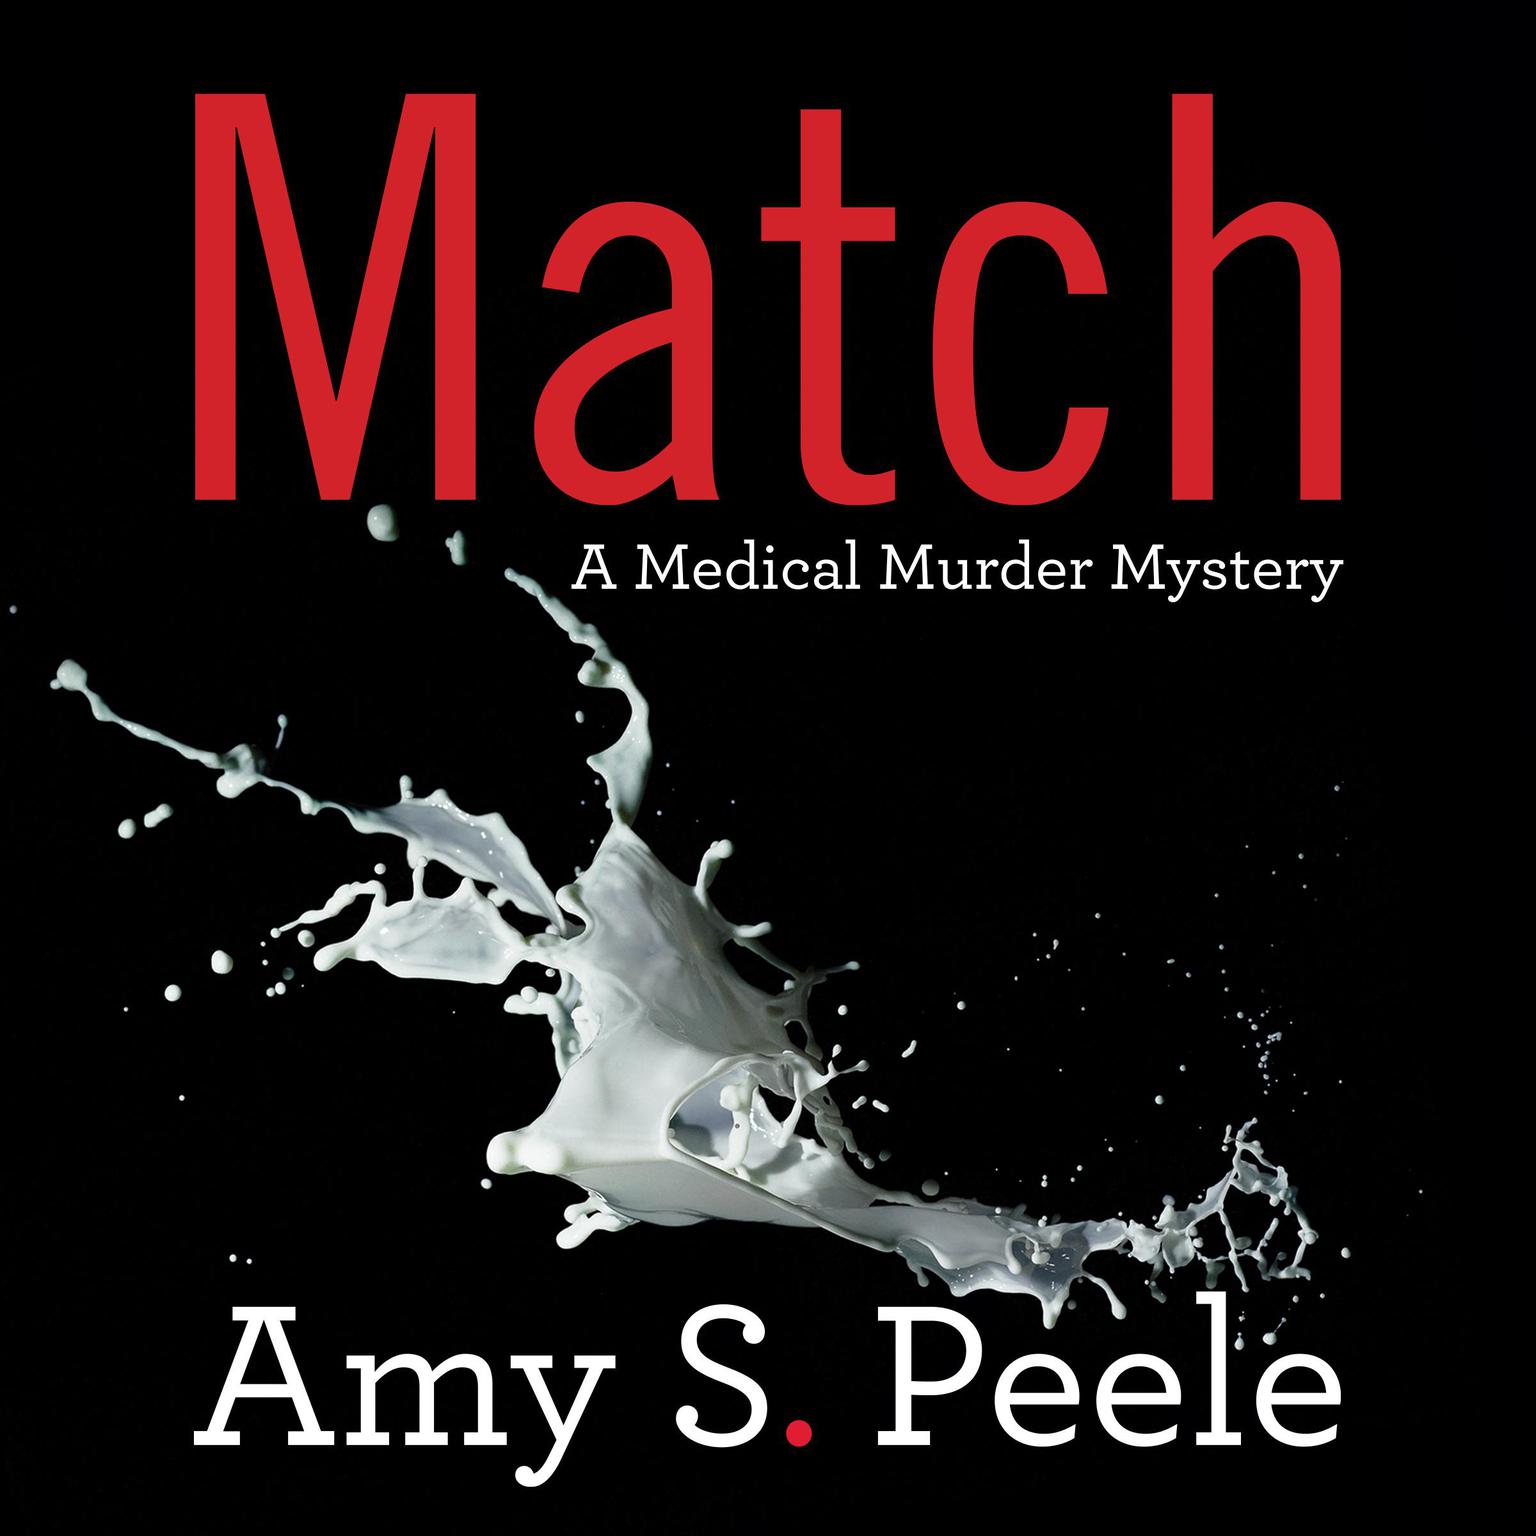 Match Audiobook, by Amy S. Peele